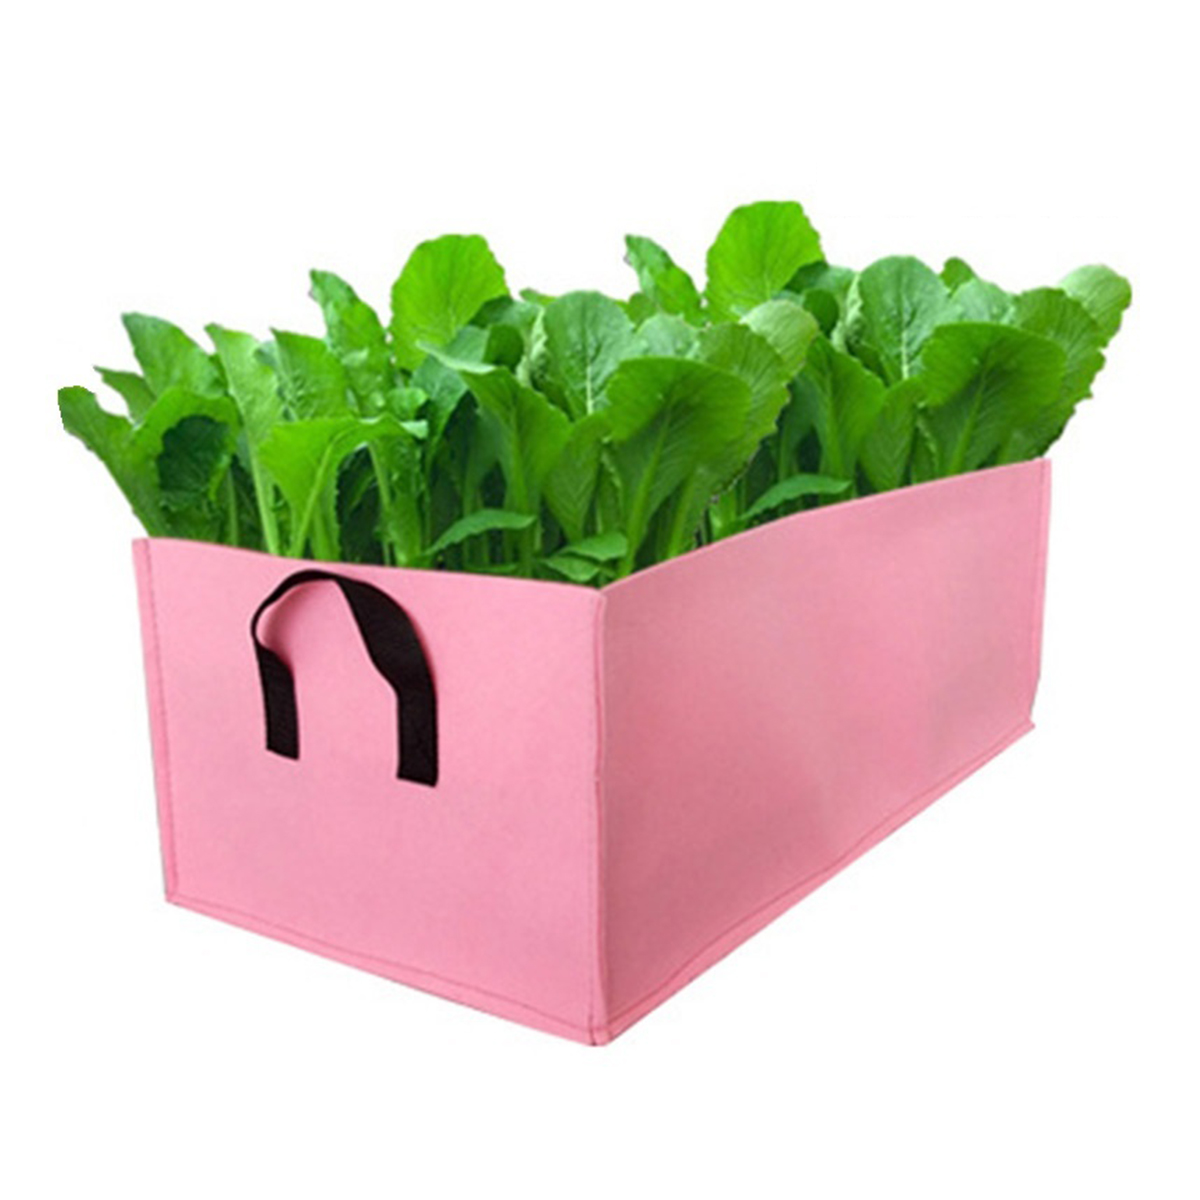 Garden-Planting-Grow-Bag-Fruit-Fabric-Vegetable-Potato-Tomato-Planter-1699856-4